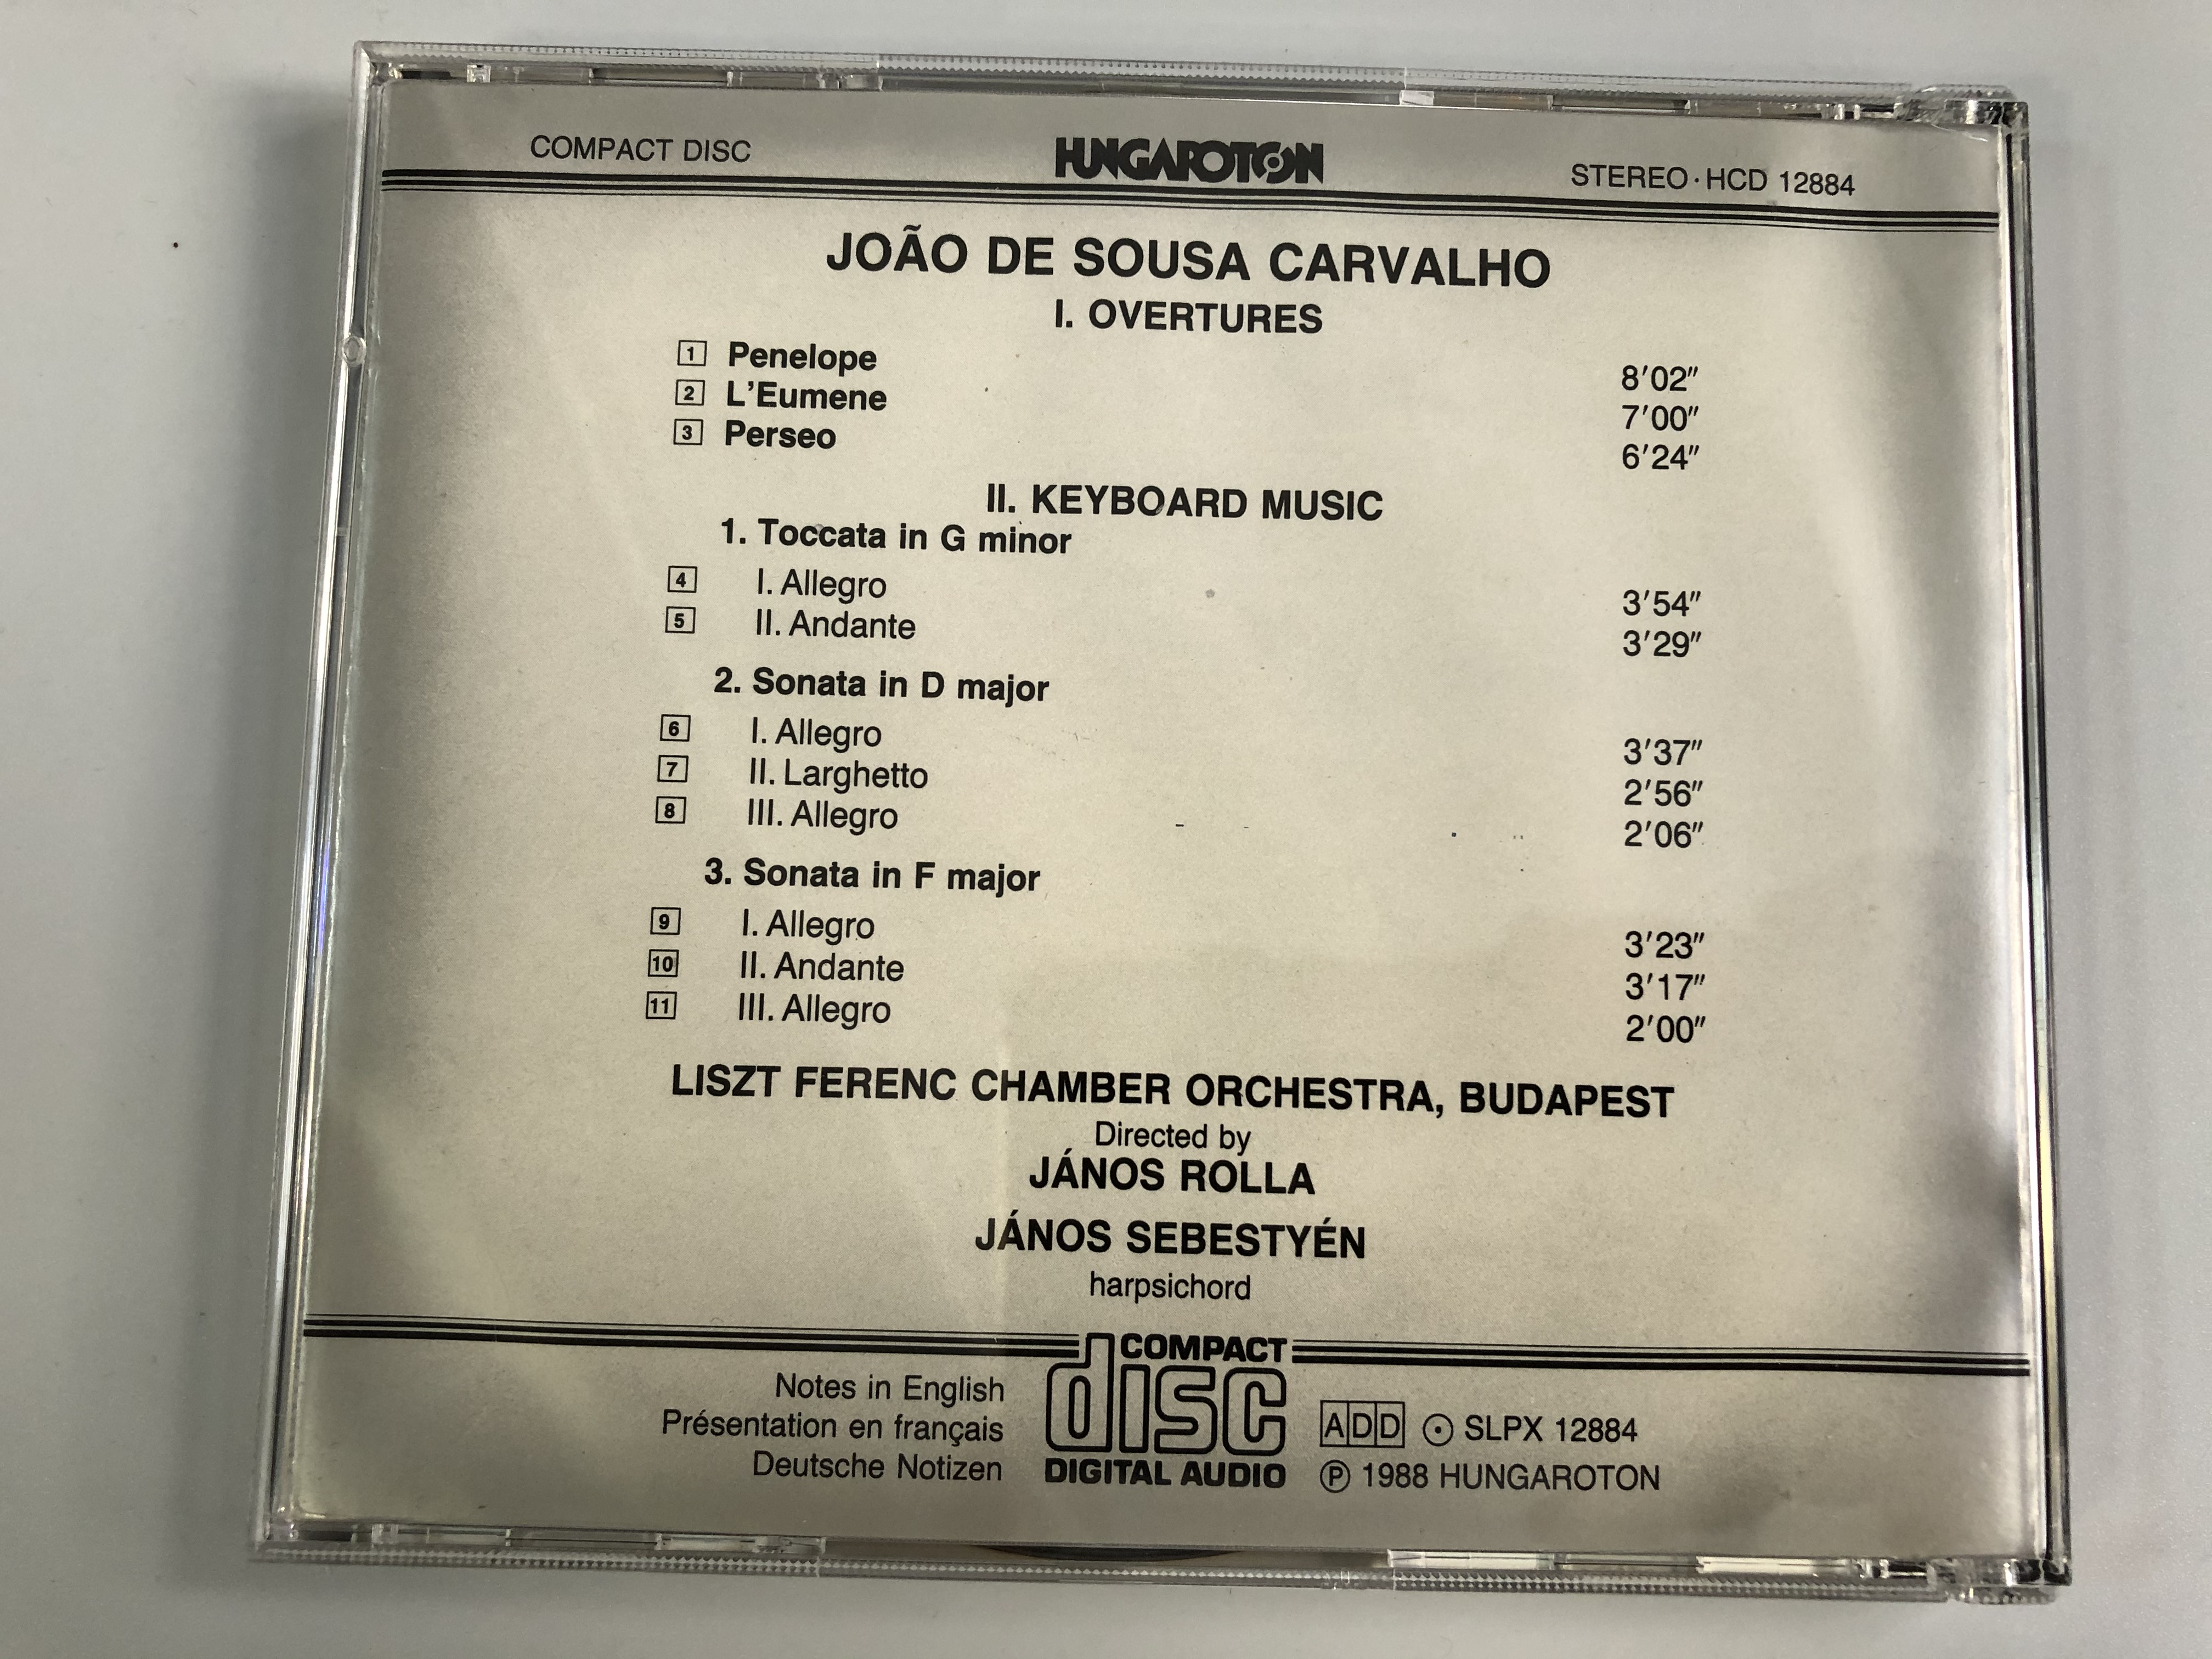 jo-o-de-sousa-carvalho-opera-overtures-keyboard-music-liszt-ferenc-chamber-orchestra-budapest-j-nos-rolla-j-nos-sebesty-n-harpsichord-hungaroton-audio-cd-1994-stereo-hcd-12884-8-.jpg